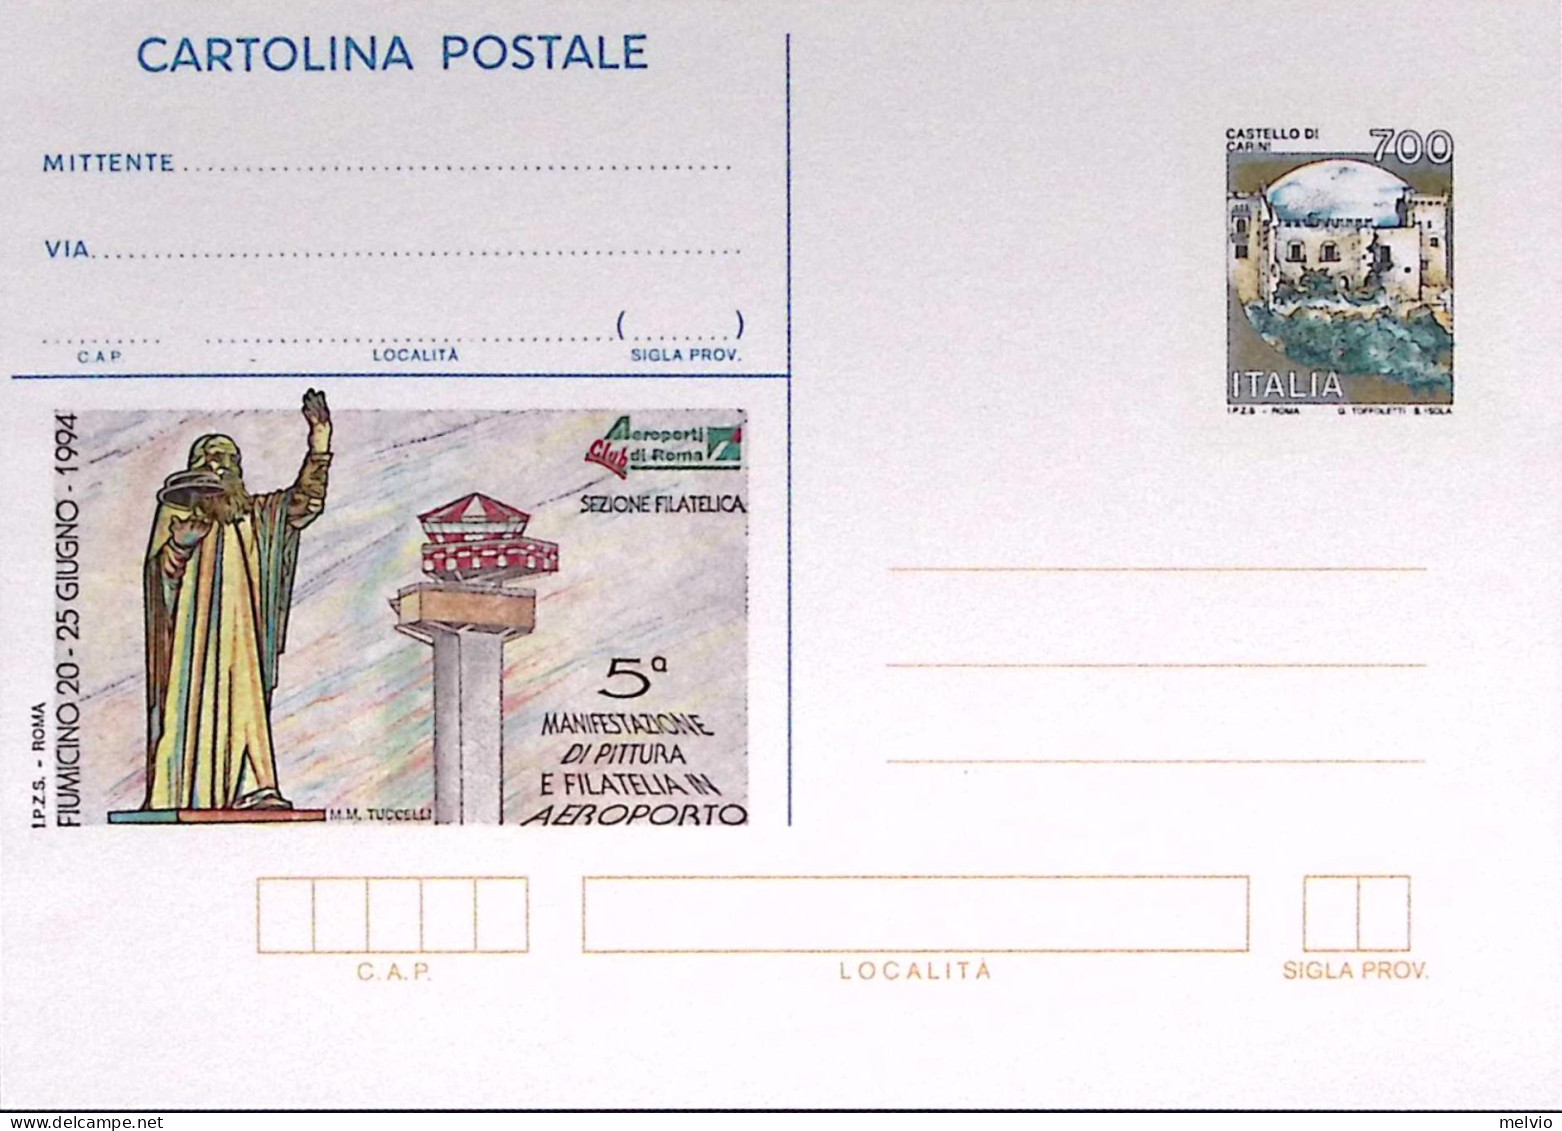 1994-ROMA AEROPORTO FIUMICINO Cartolina Postale Lire 700 Soprastampa IPZS Nuova - Stamped Stationery